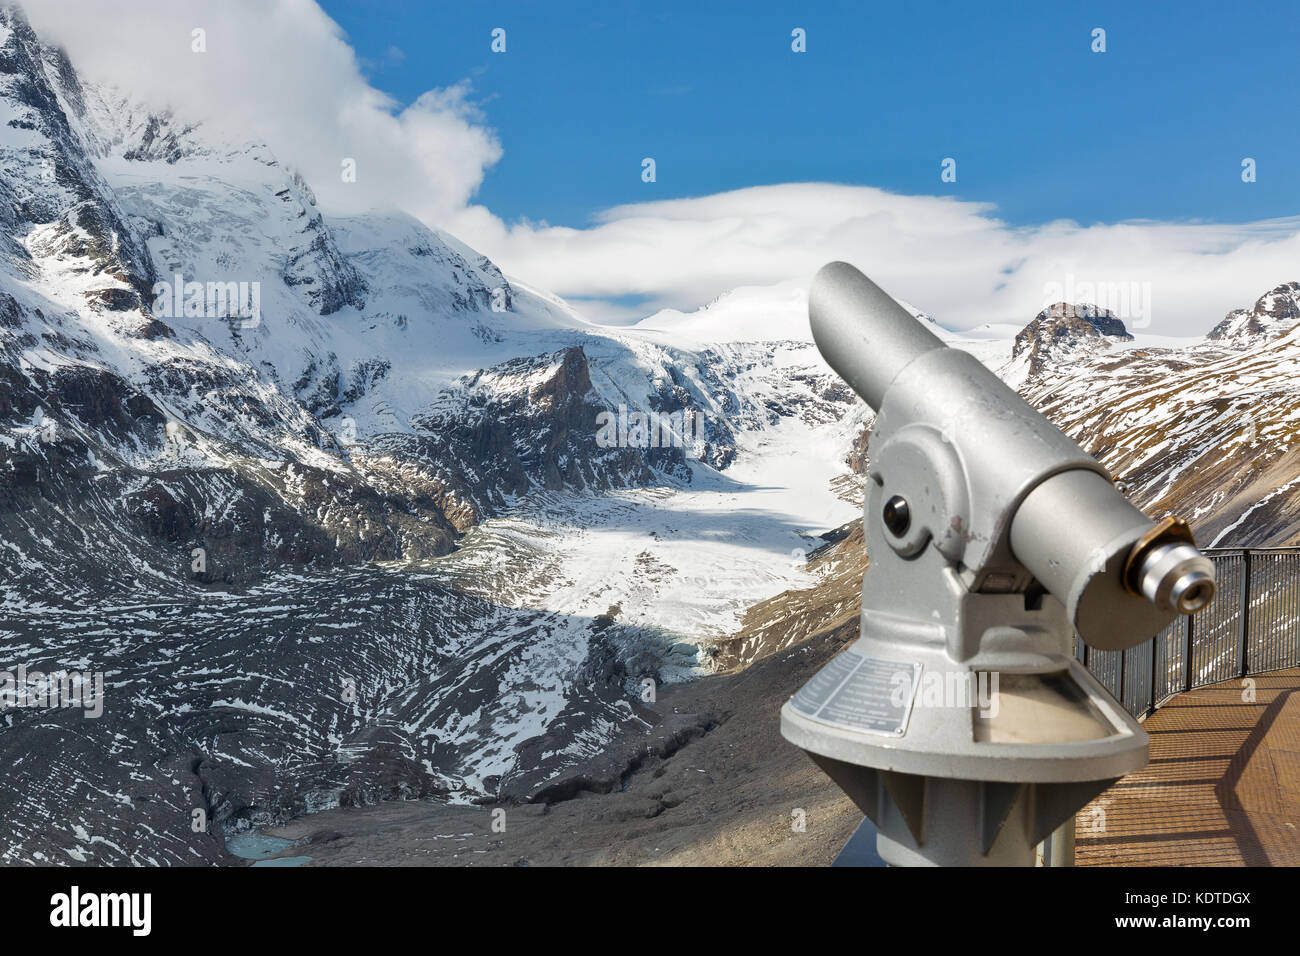 Observation point with telescope. Kaiser Franz Joseph glacier, Grossglockner High Alpine Road in Austrian Alps. Focus on background. Stock Photo